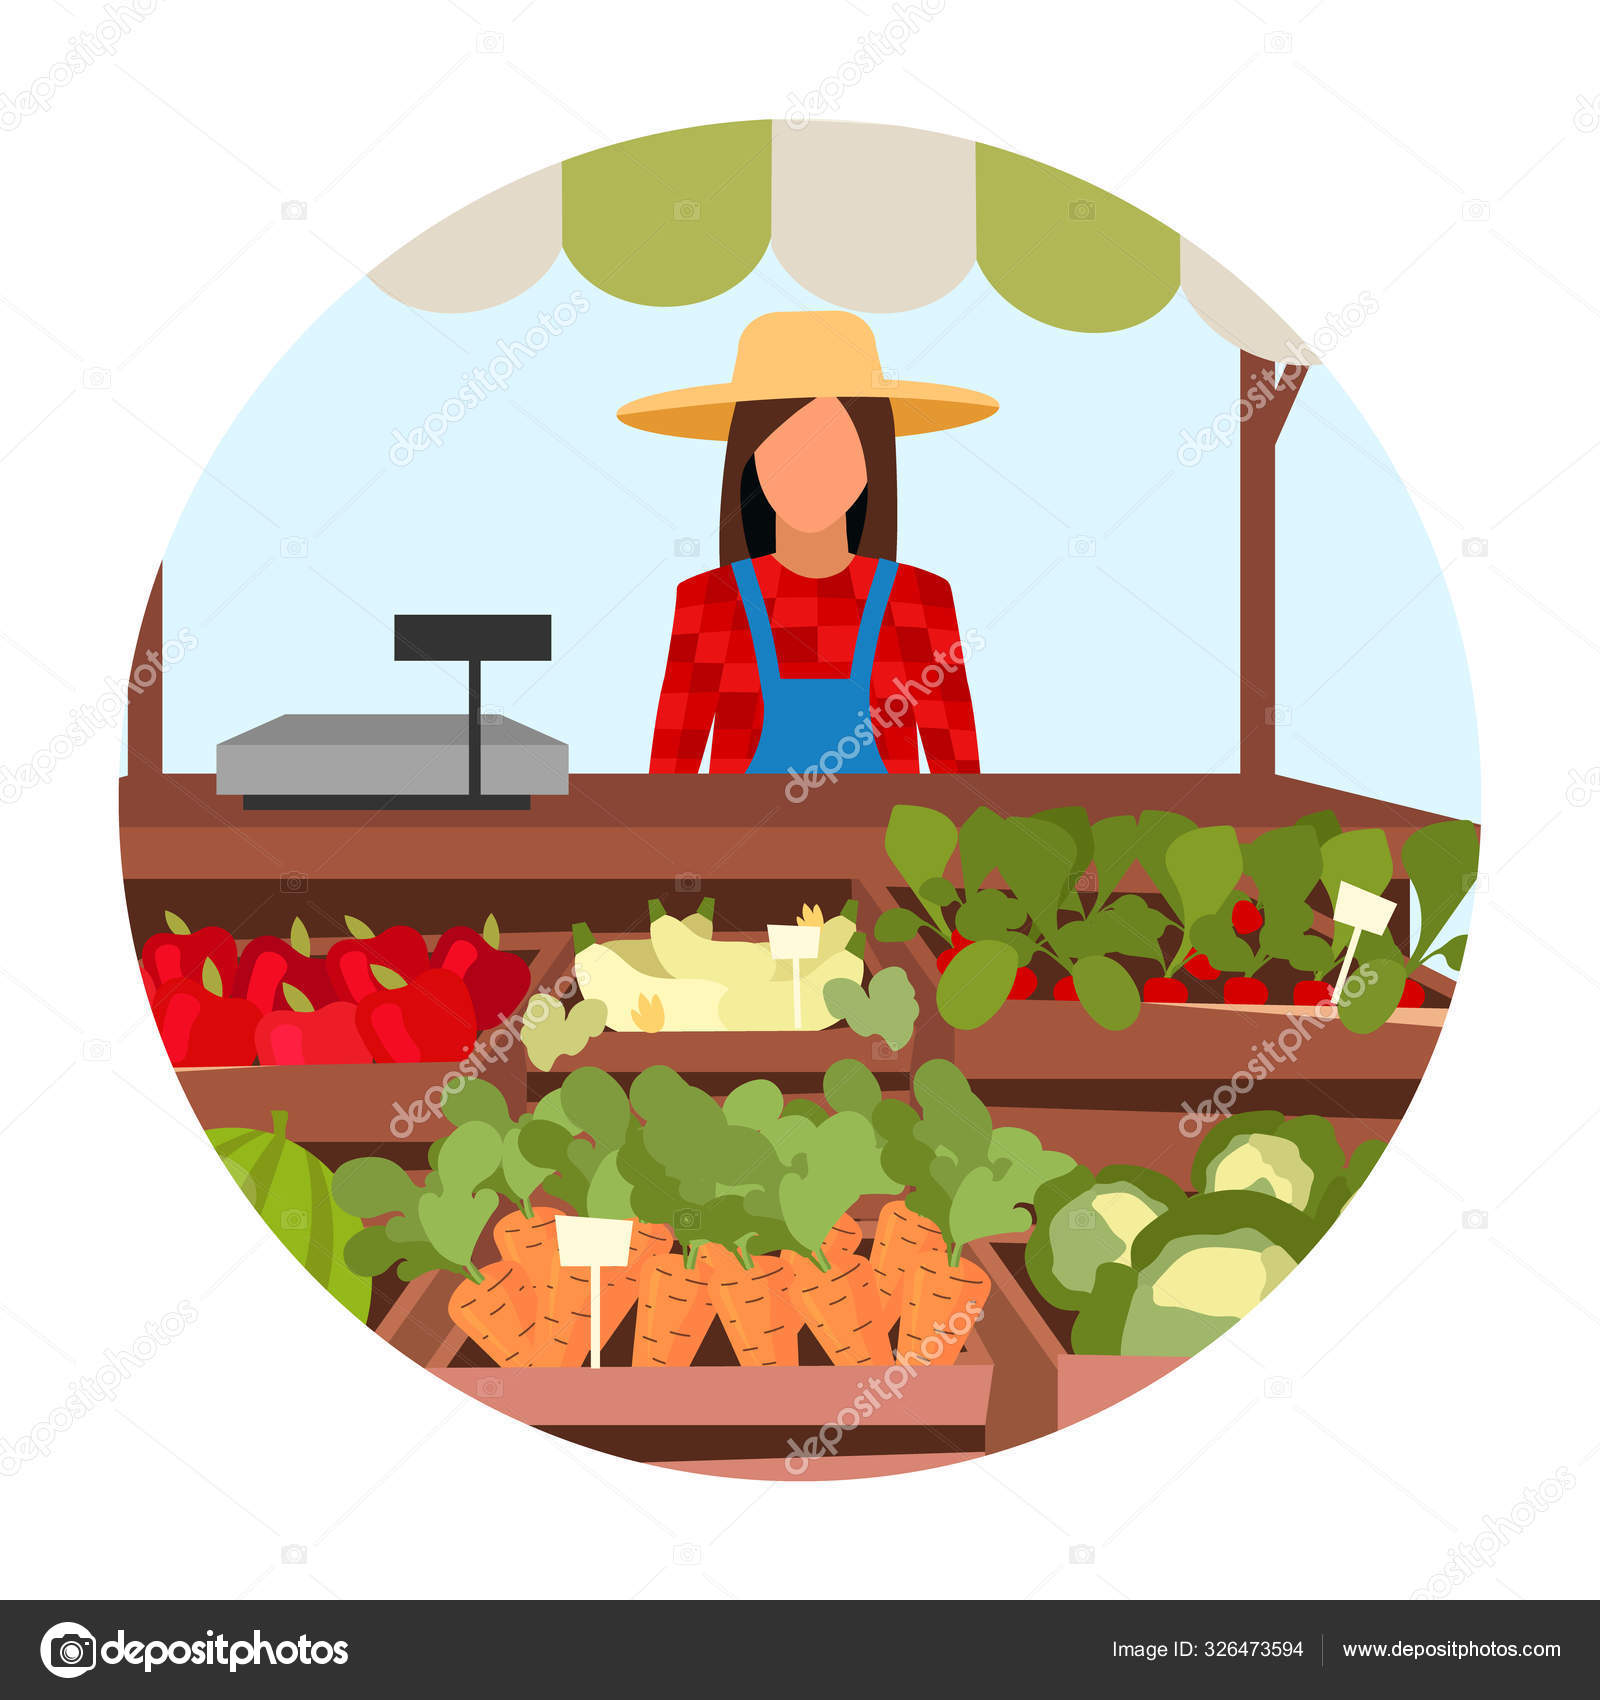 https://st3.depositphotos.com/30046358/32647/v/1600/depositphotos_326473594-stock-illustration-organic-farm-products-flat-concept.jpg